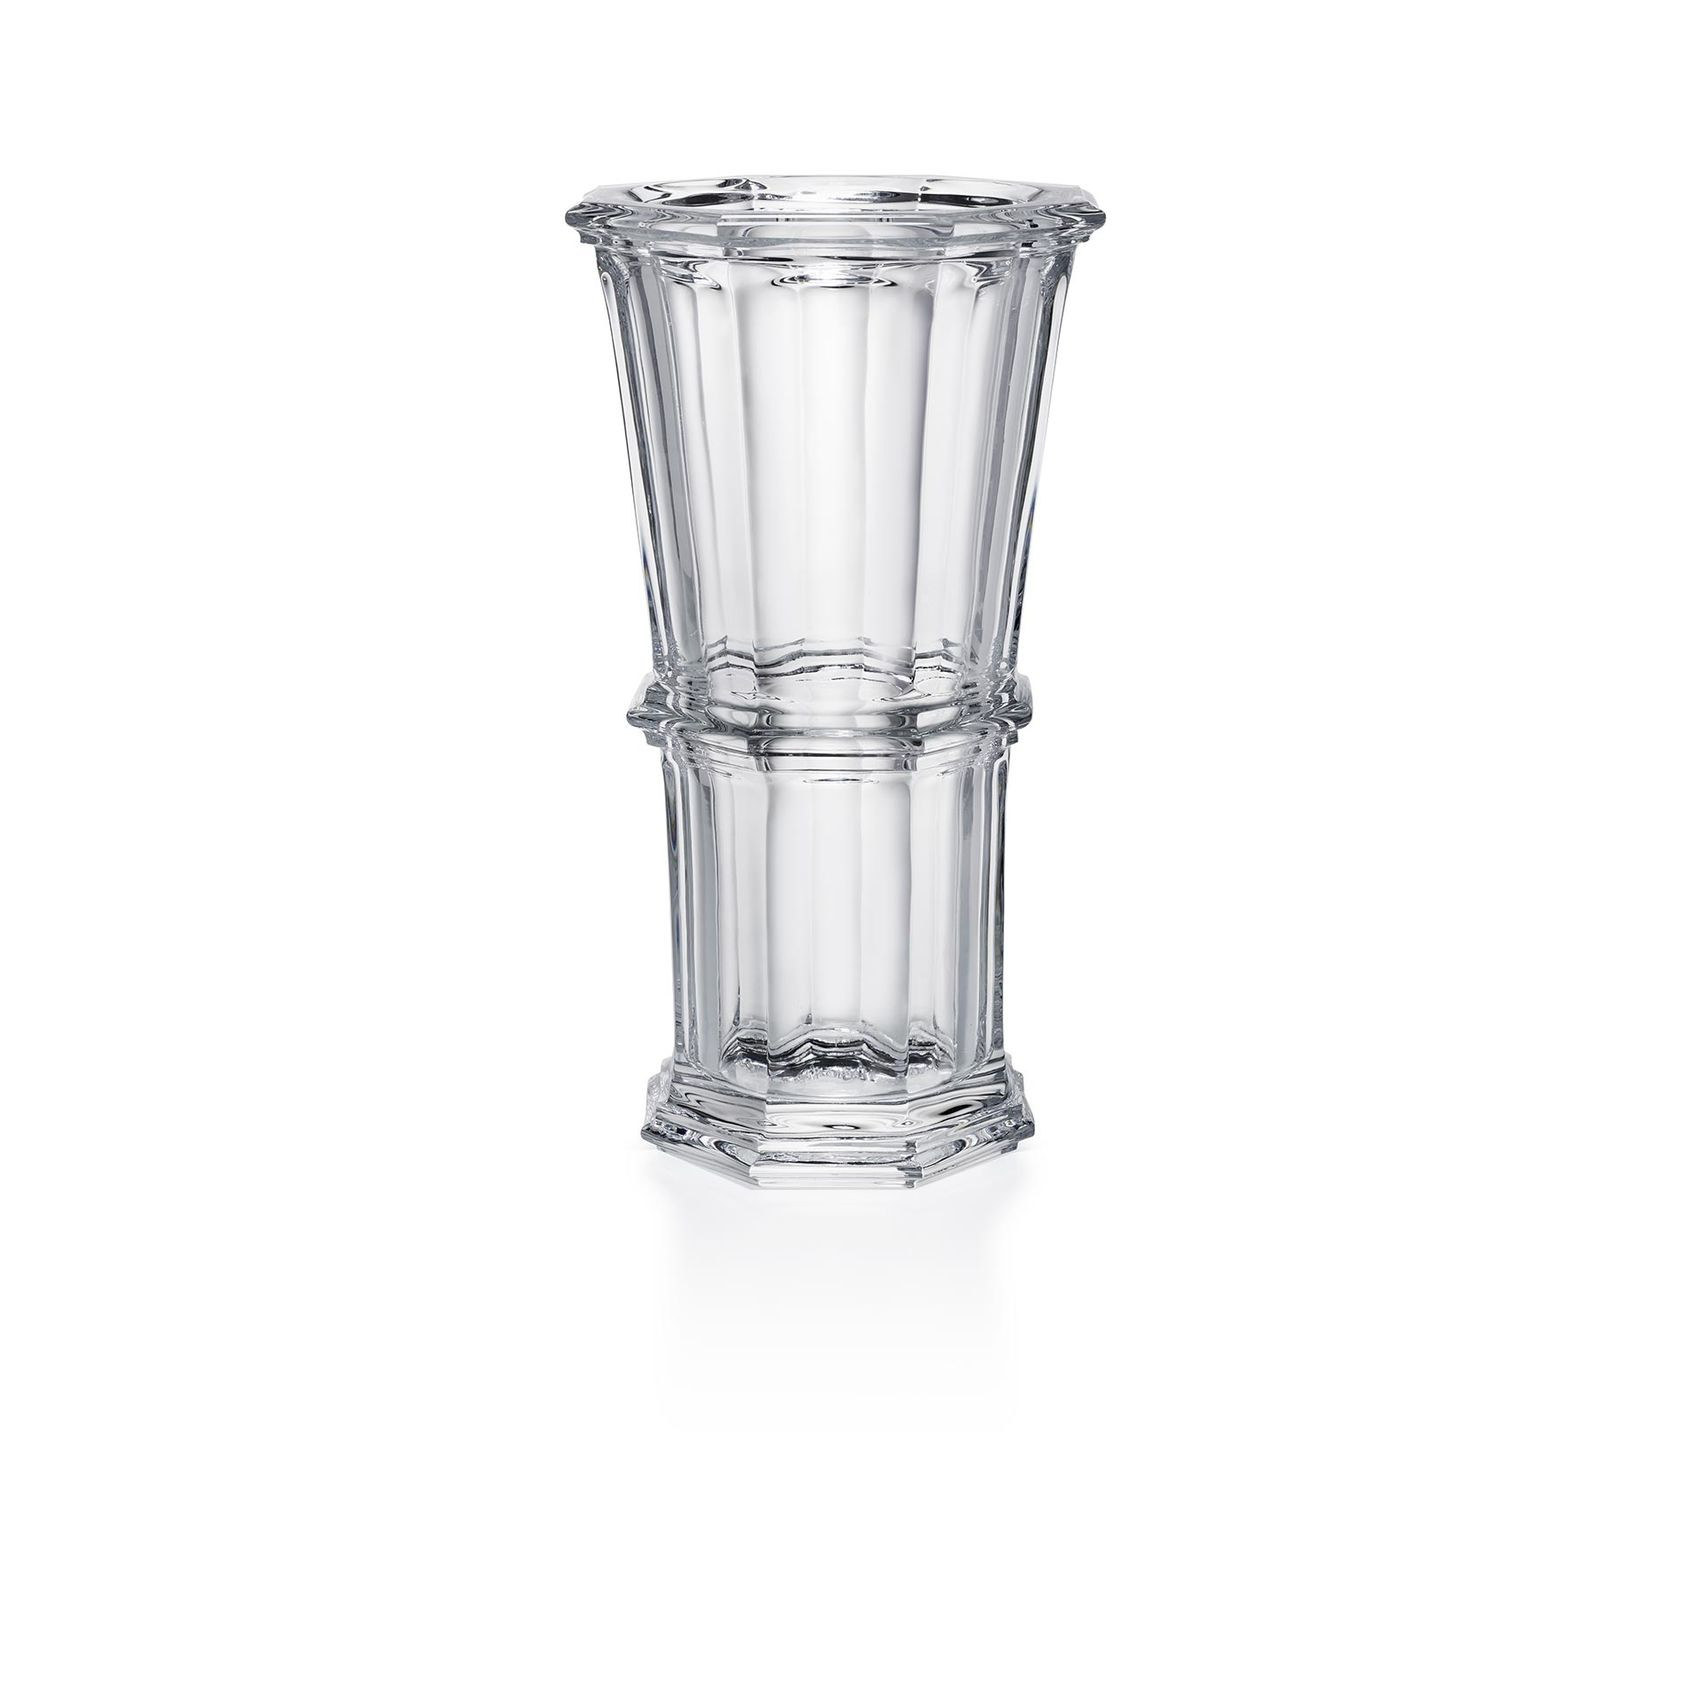 12 Fashionable Baccarat Gingko Crystal Vase 2023 free download baccarat gingko crystal vase of harcourt 1841 vase baccarat with regard to harcourt 1841 vase clear